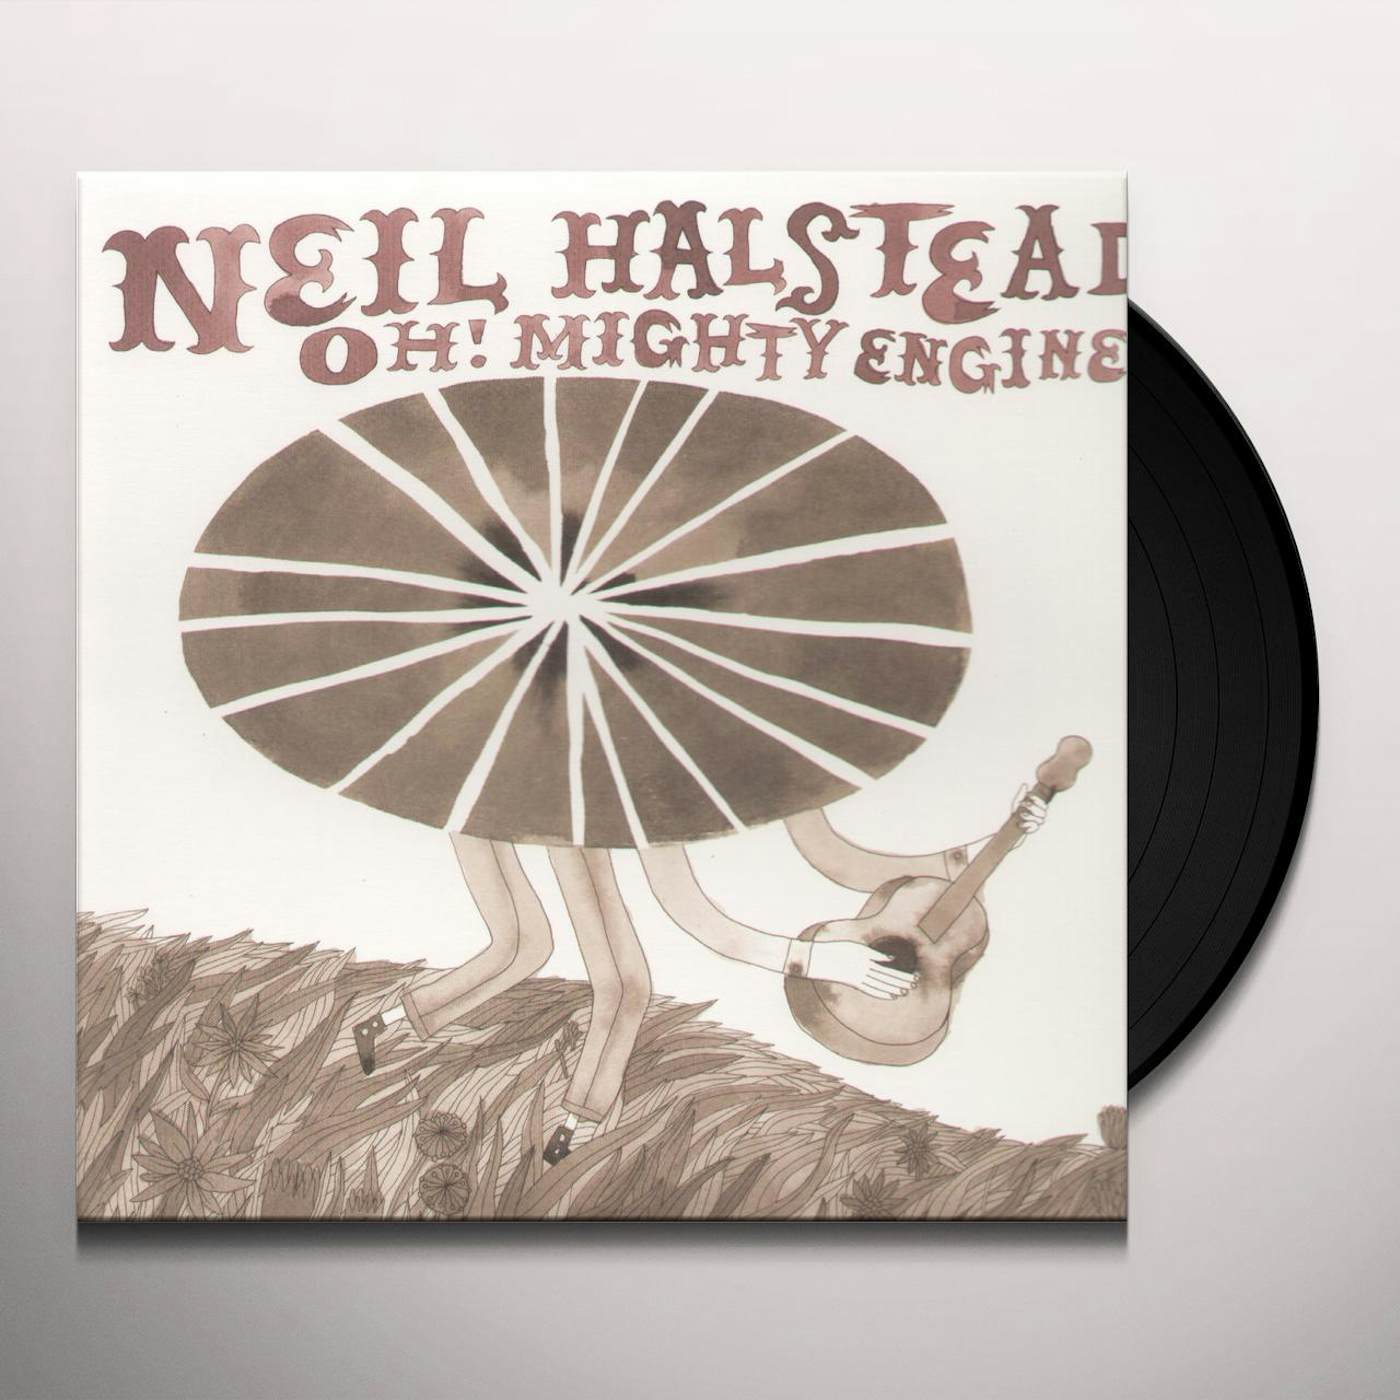 Neil Halstead OH MIGHTY ENGINE (Vinyl)